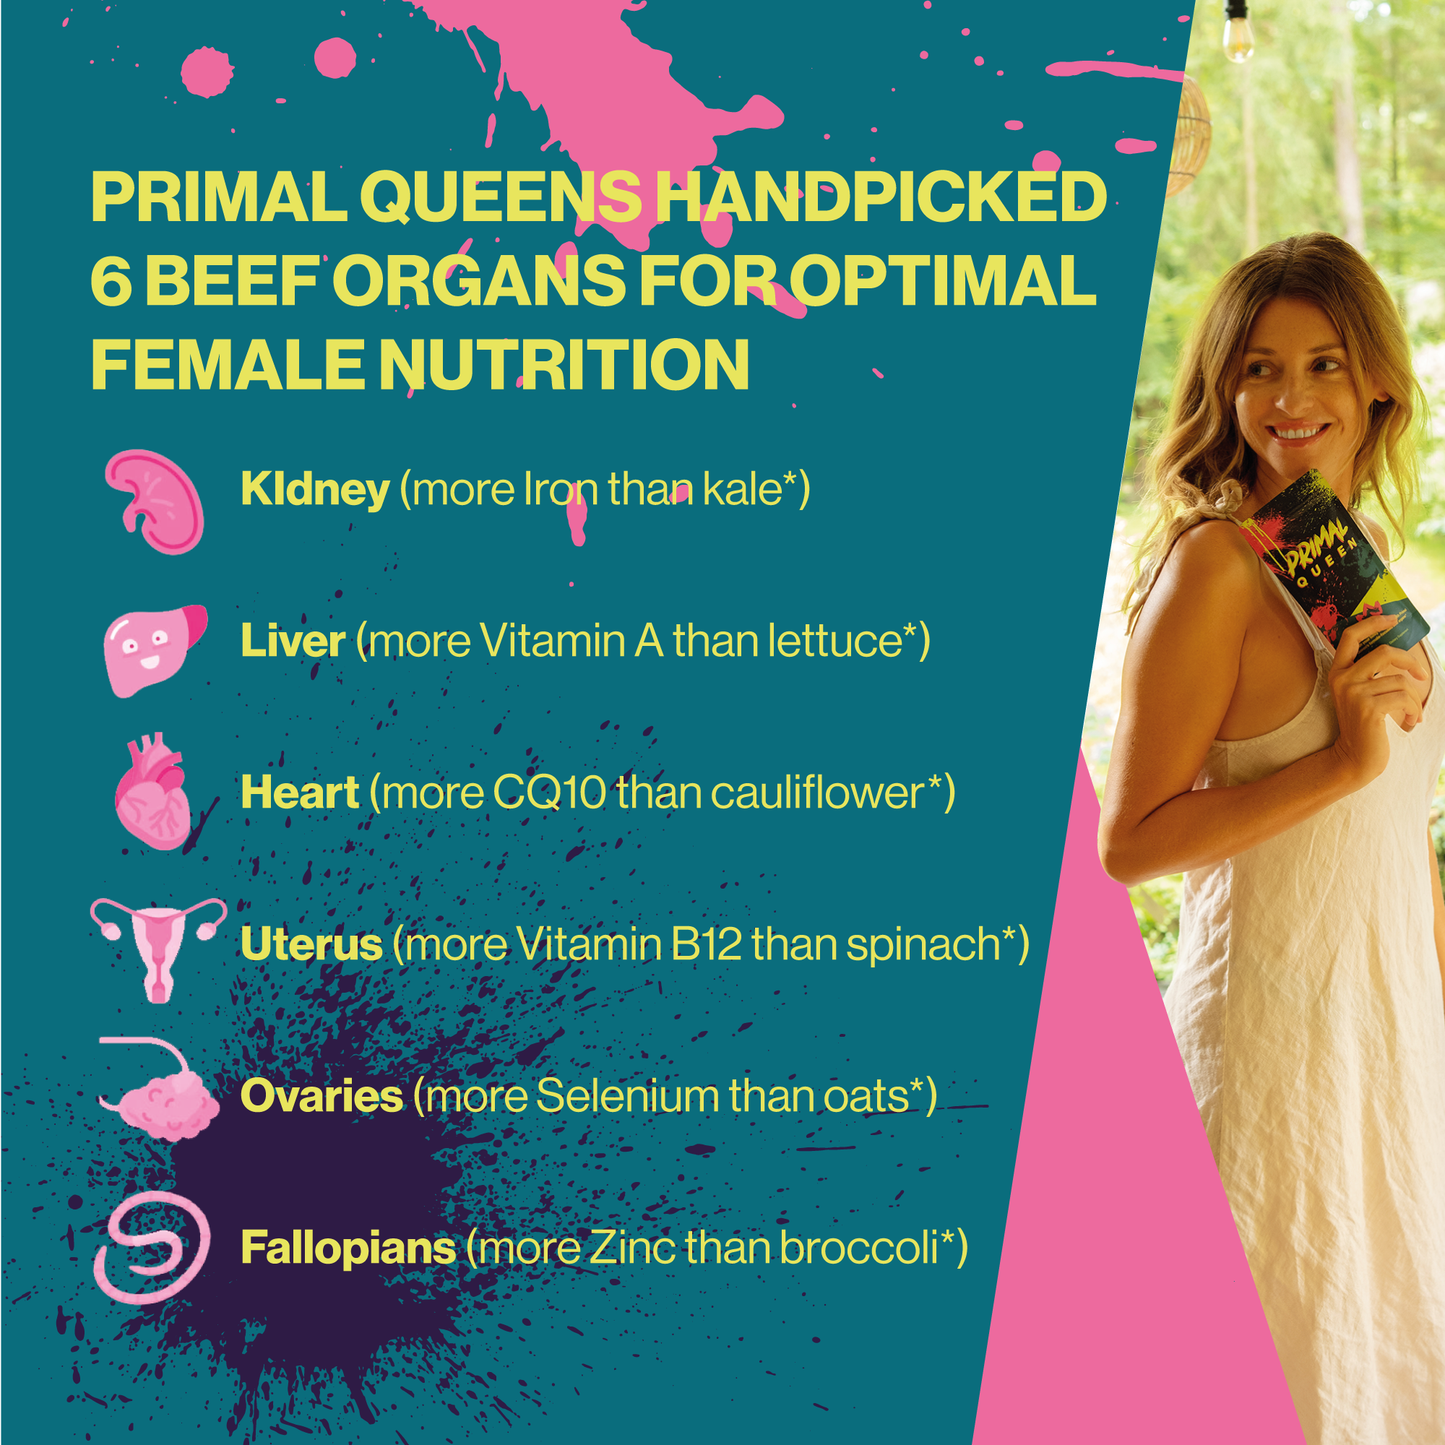 Primal Queen Beef Organ Superfoods Starter Kit - 30 Servings